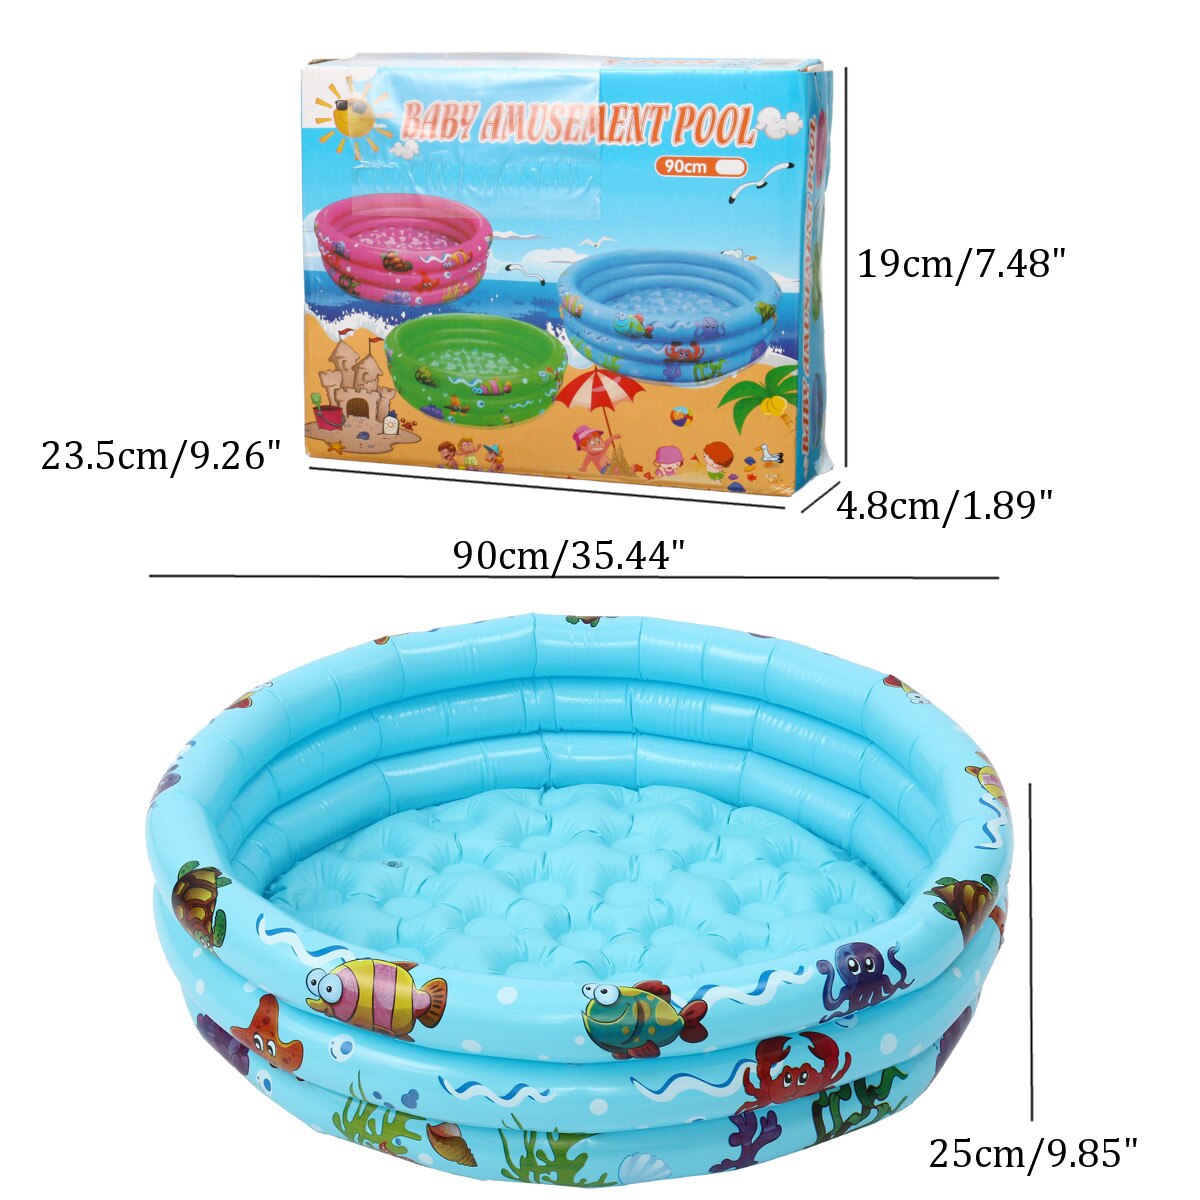 90 x 25cm oppustelig baby swimmingpool piscina bærbar udendørs børnebassin badekar børnepool baby swimmingpool vandkar